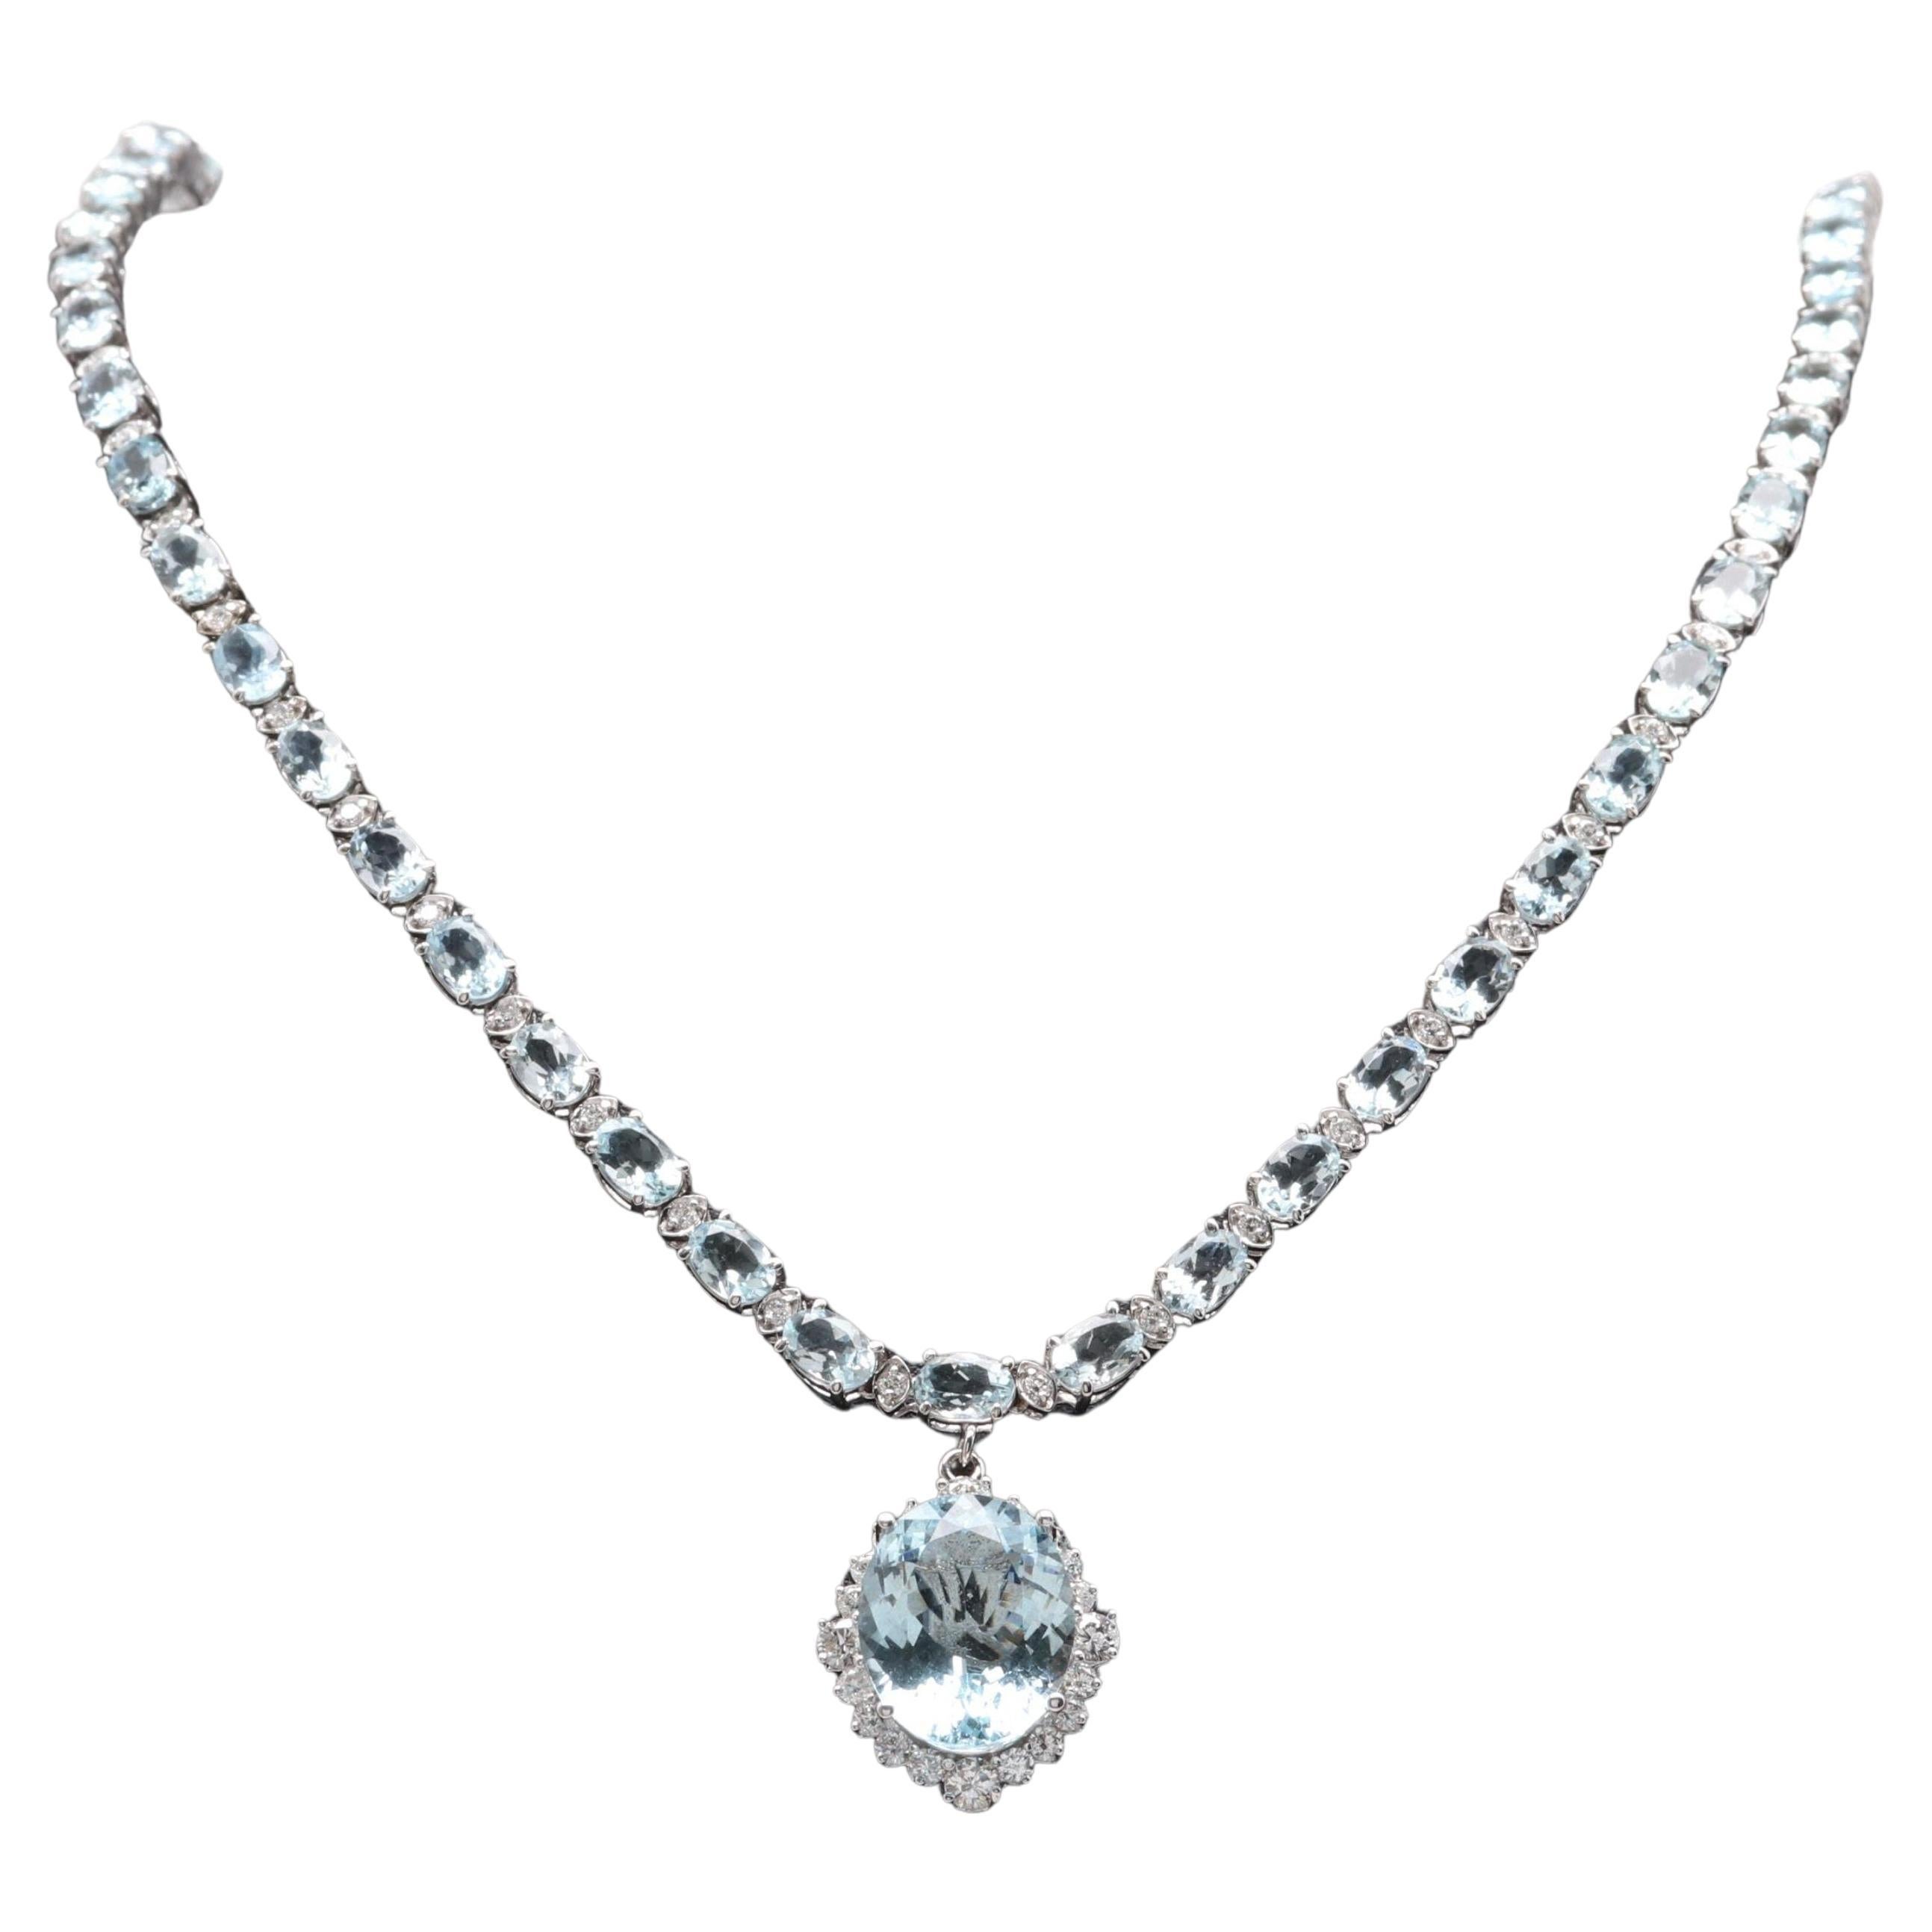 Oval Cut Aquamarine Necklace, Natural Aquamarine Diamond Pendant Necklace